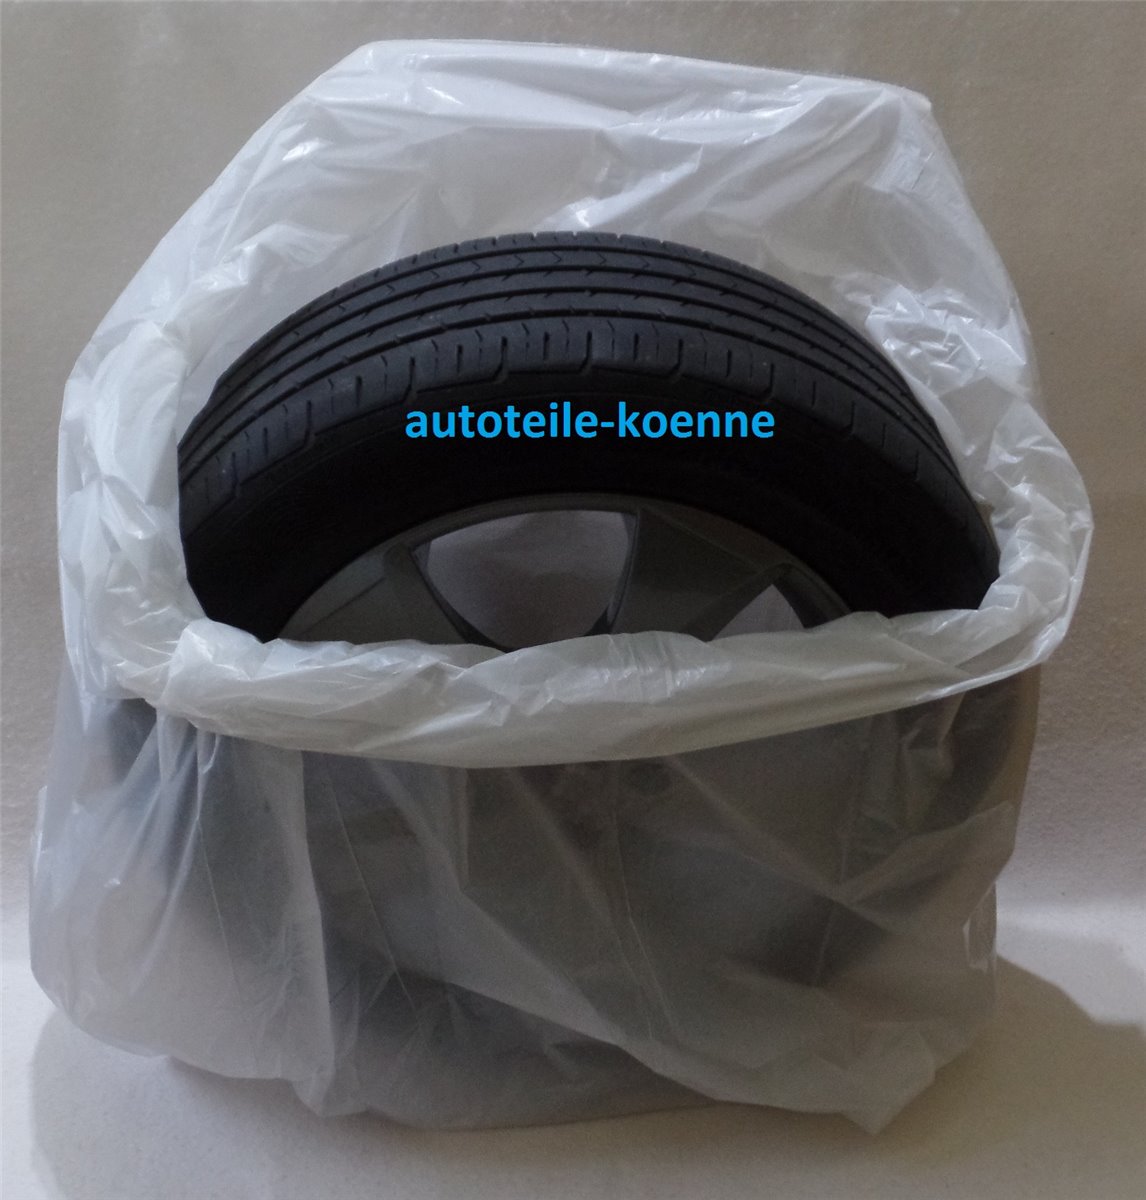 autoteile-koenne - 300 Reifensäcke XL Rolle Reifentüten Reifentaschen  Reifensäcke Reifentaschen